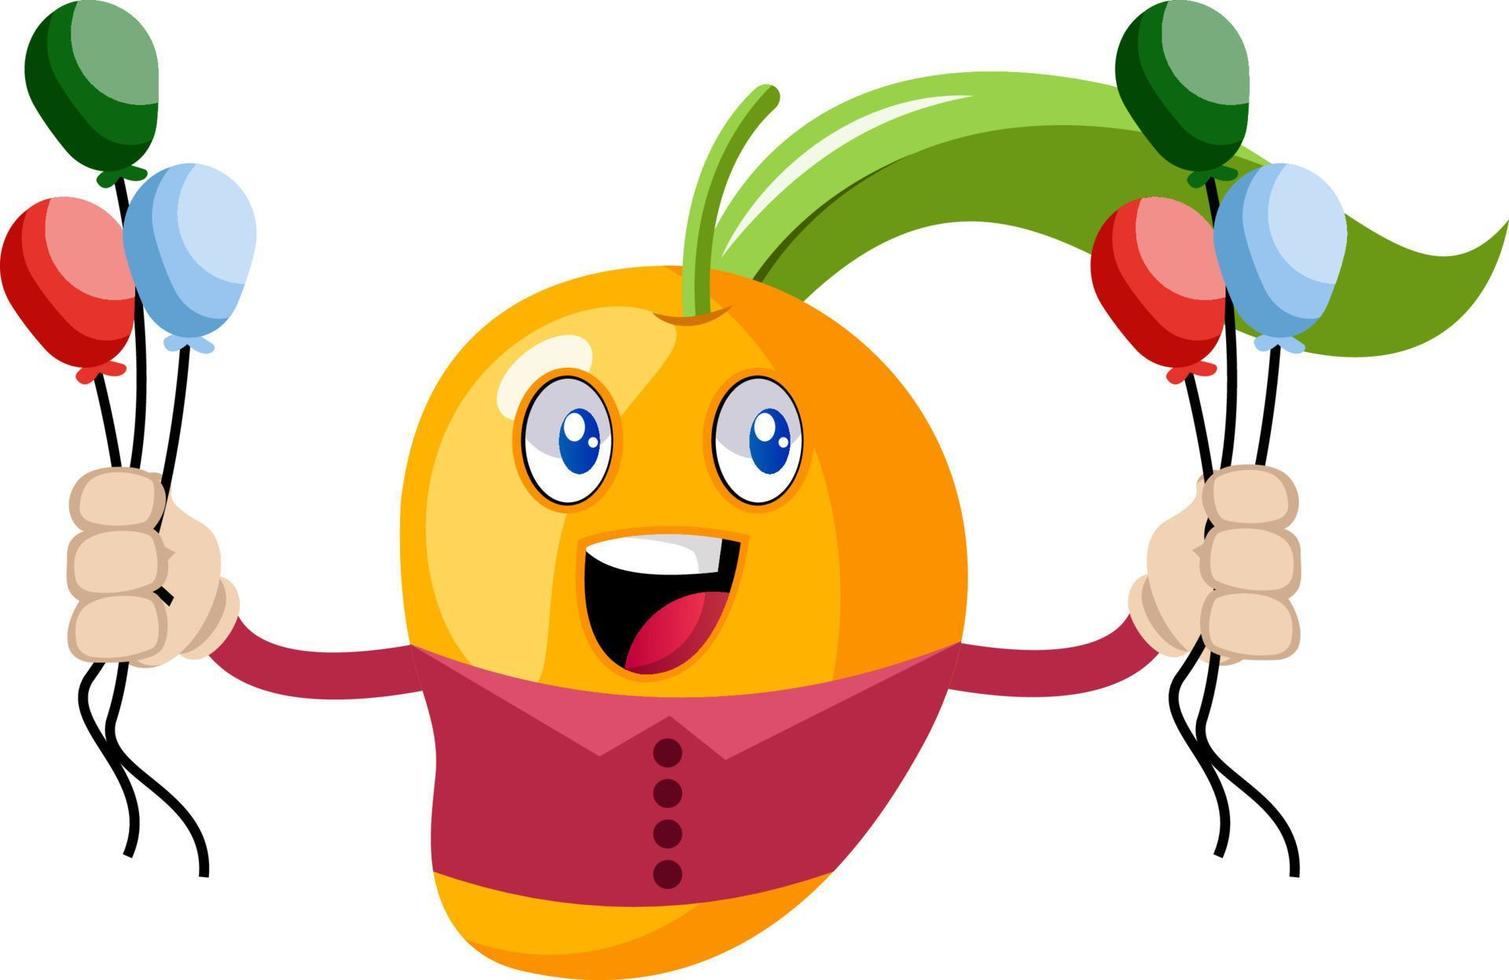 mango Holding ballonnen, illustratie, vector Aan wit achtergrond.